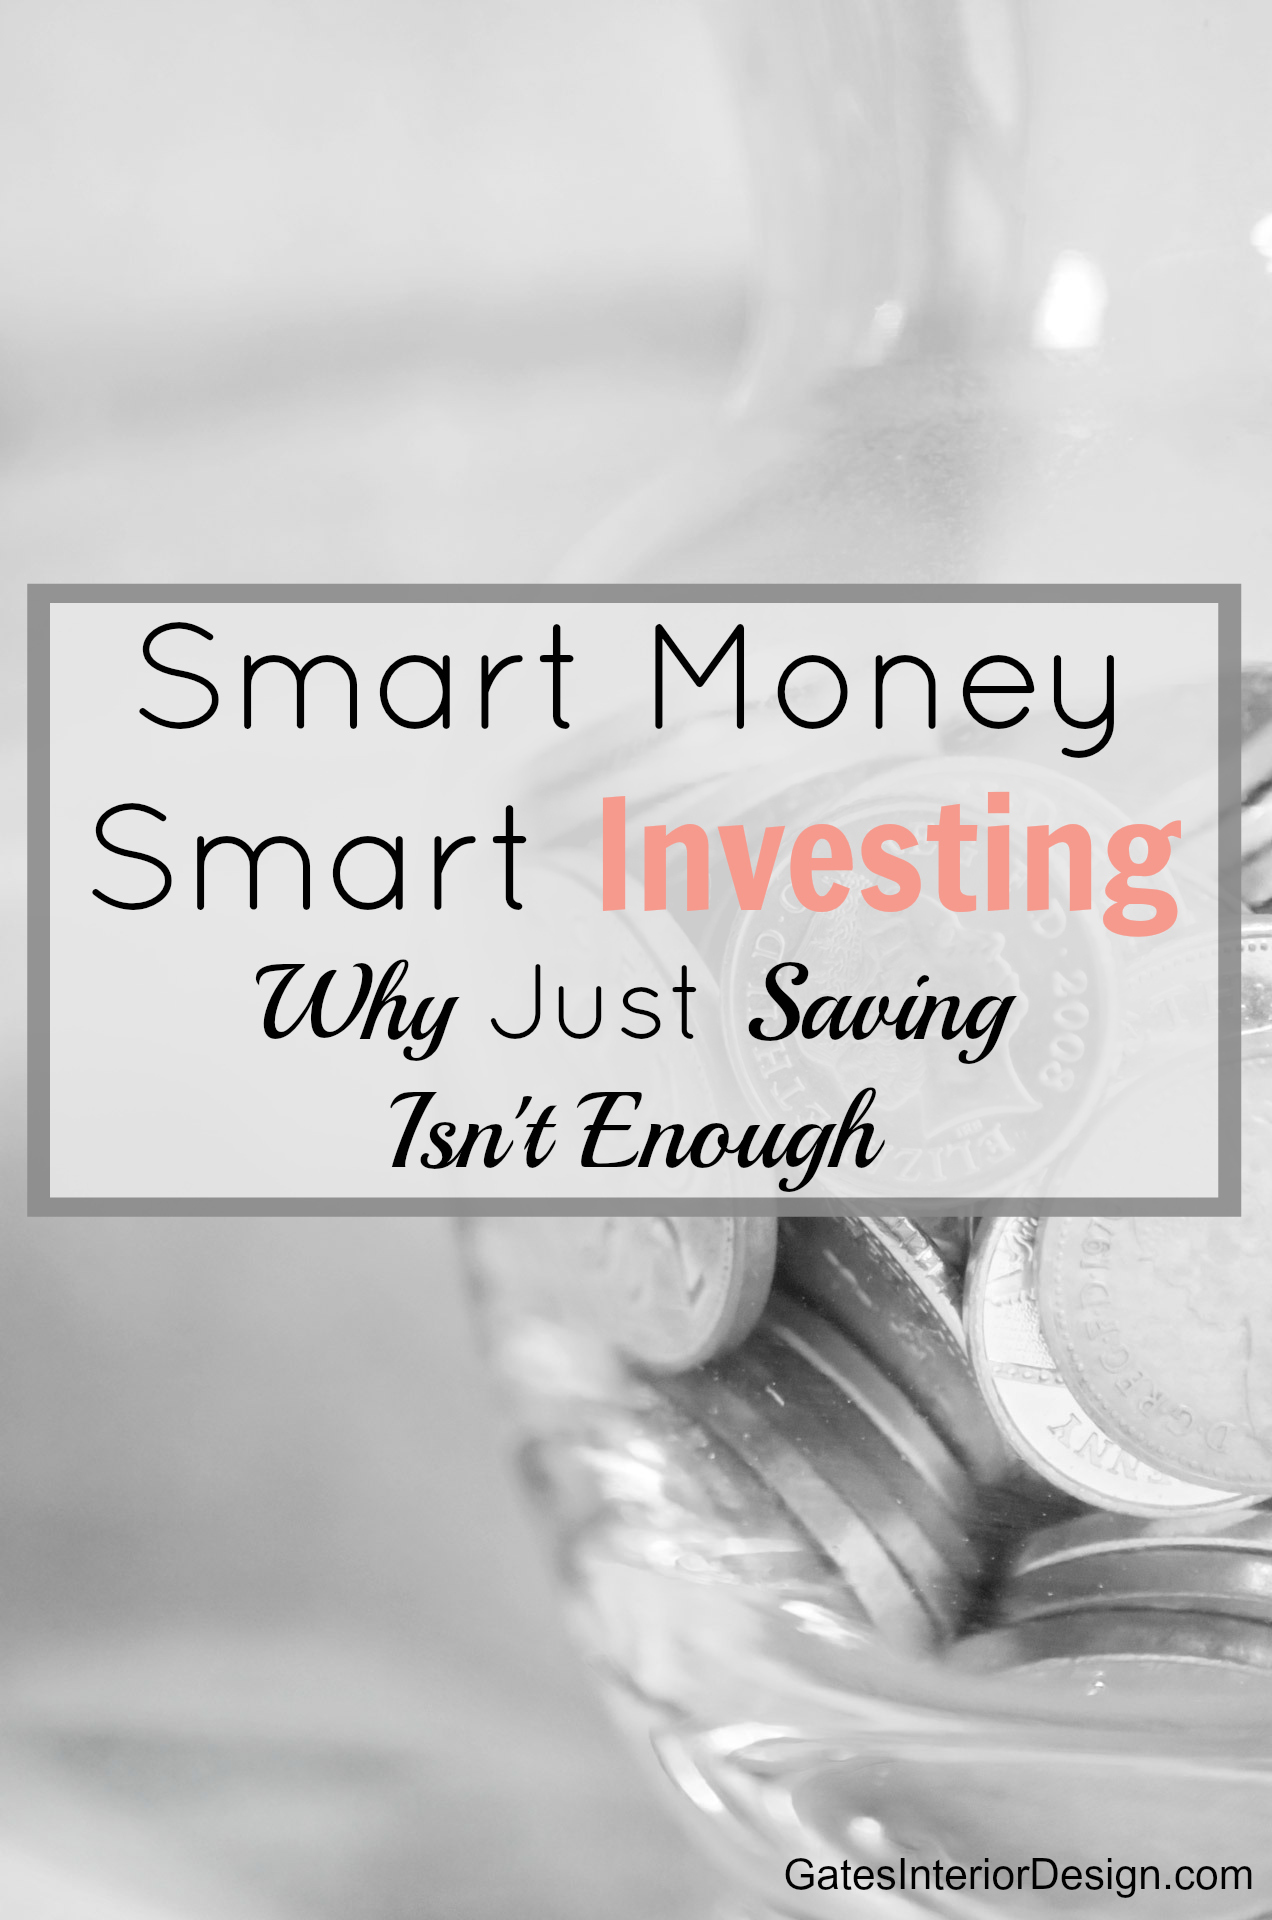 Smart Money Smart Investing – Why Saving Isn’t Enough